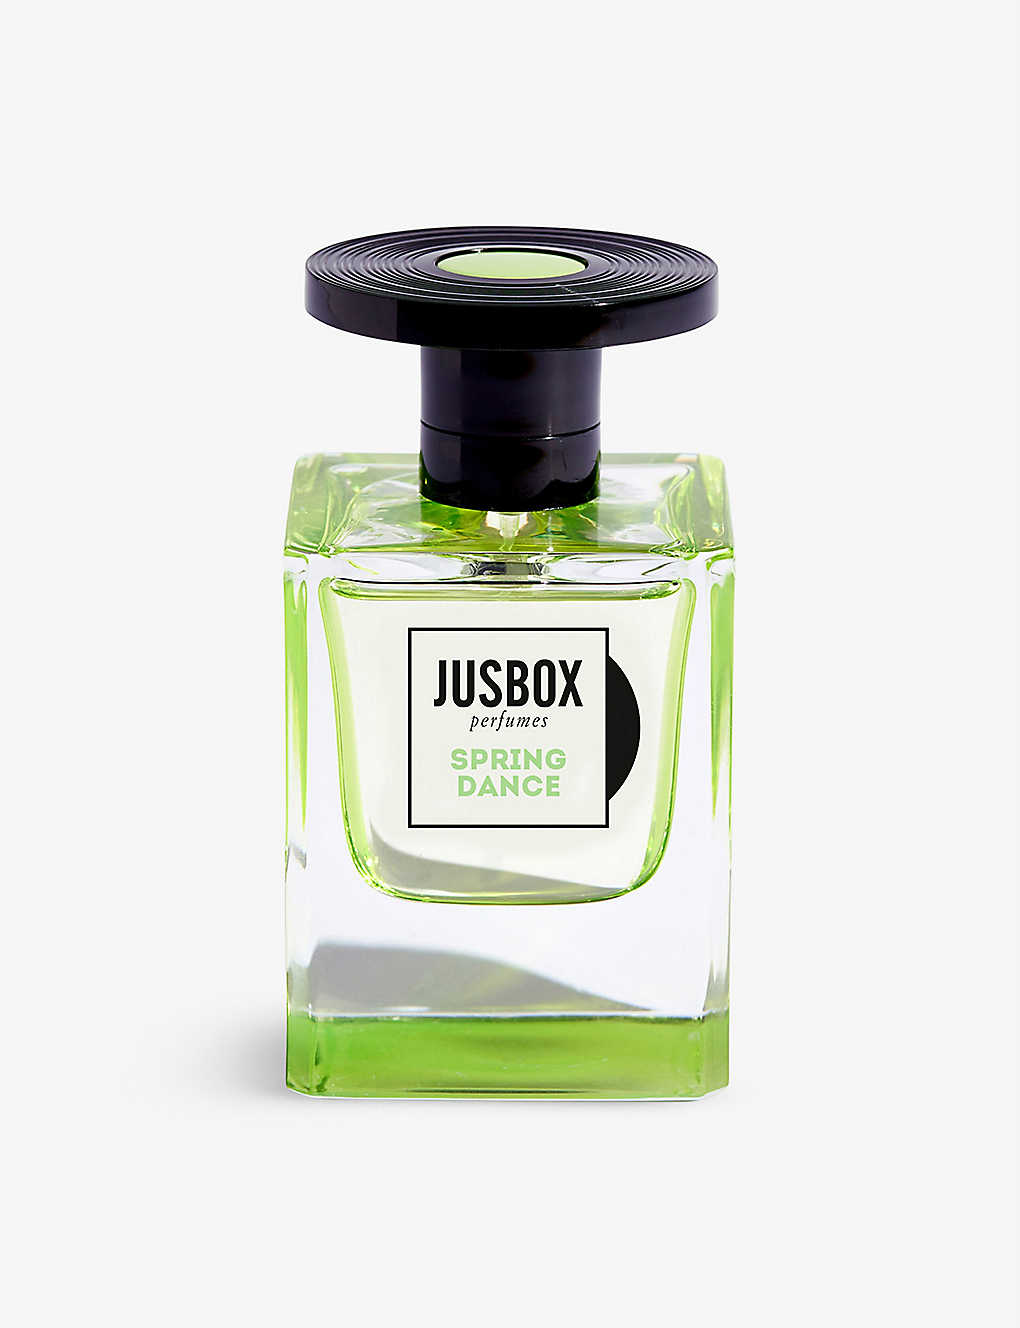 JUSBOX Spring Dance eau de parfum 78ml £125.00